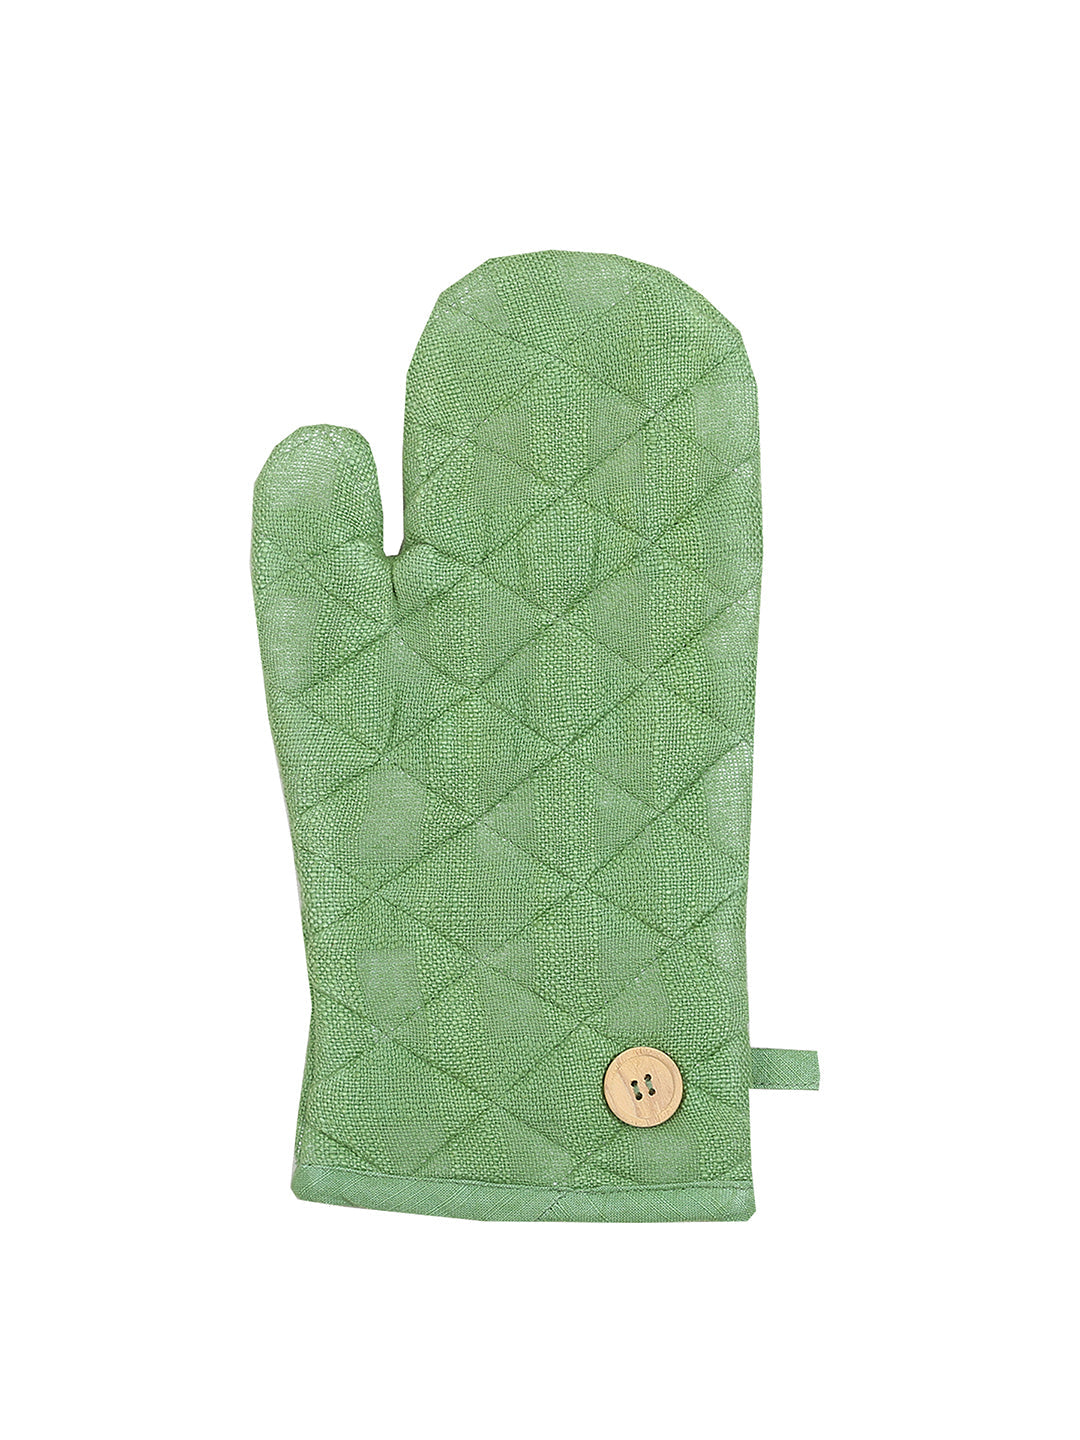 Nelvayal Gloves (Green)